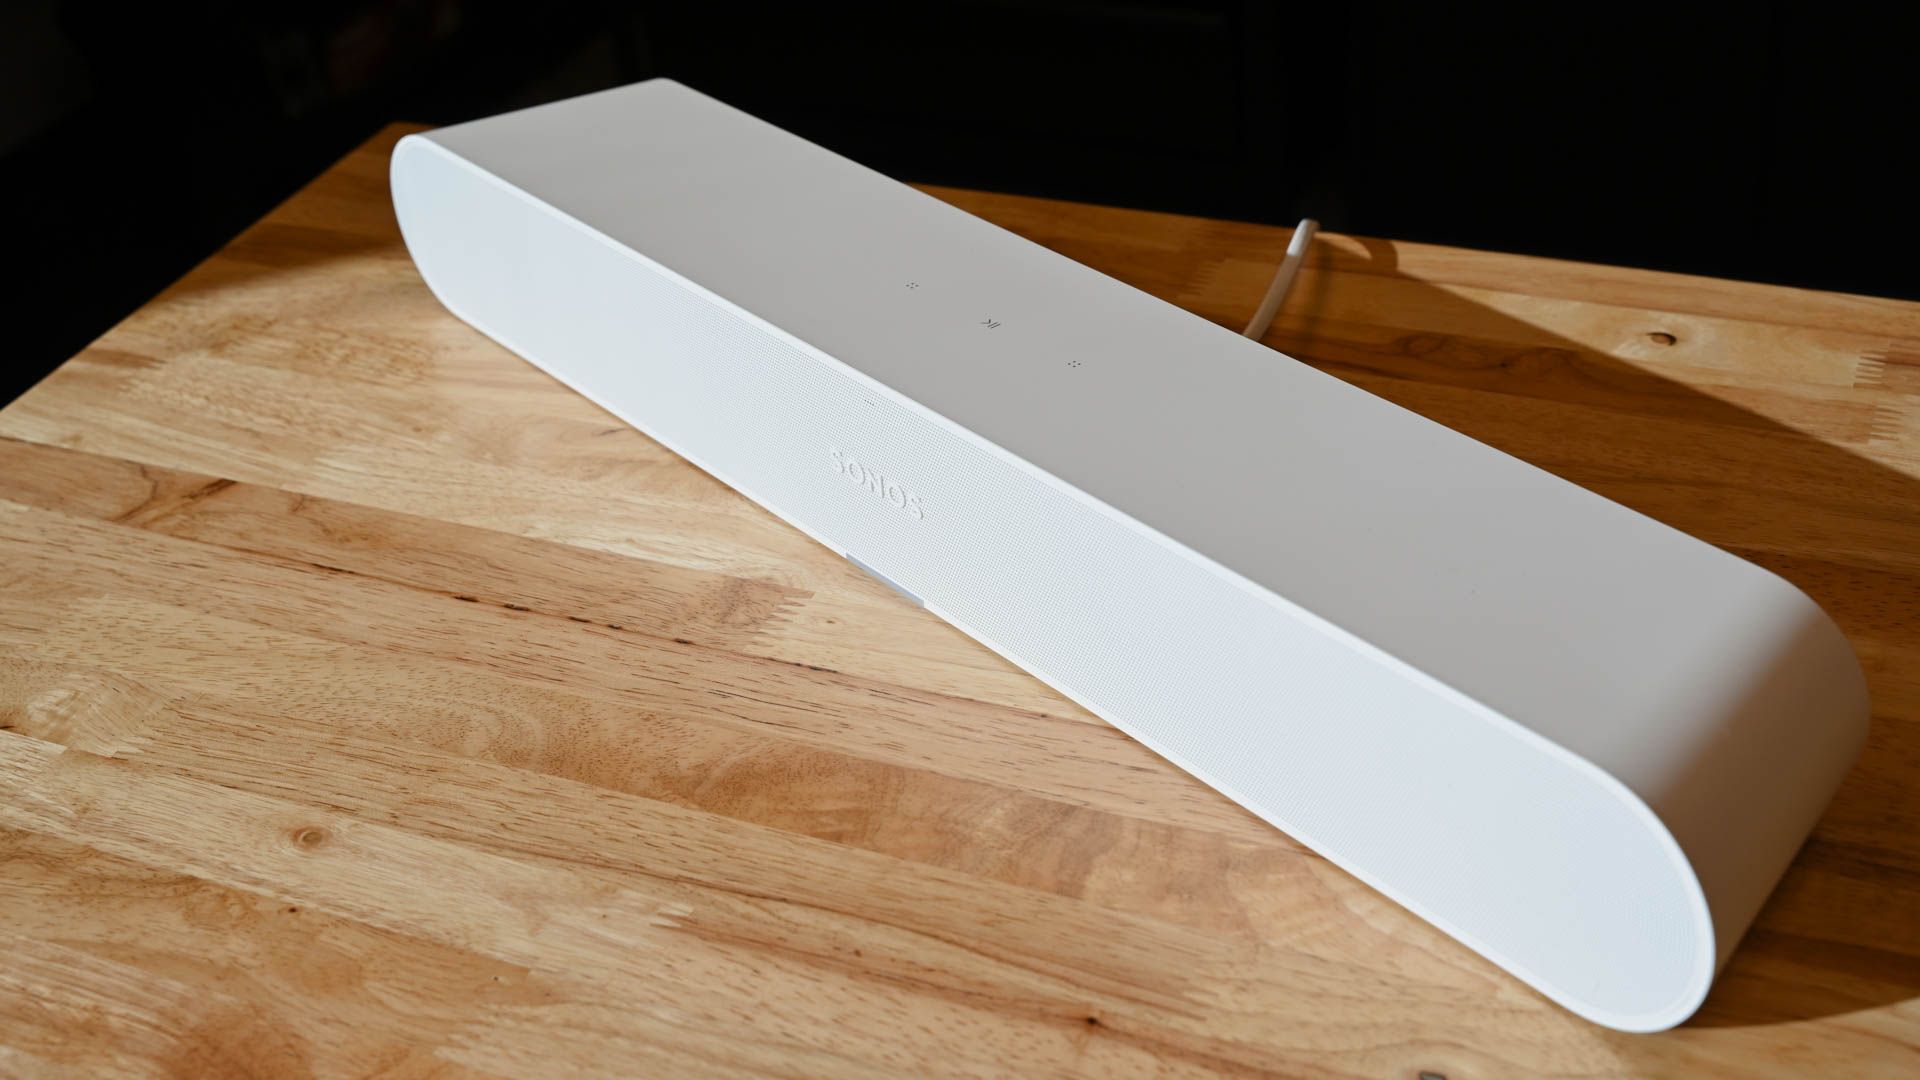 Sonos Ray soundbar angled on wooden counter